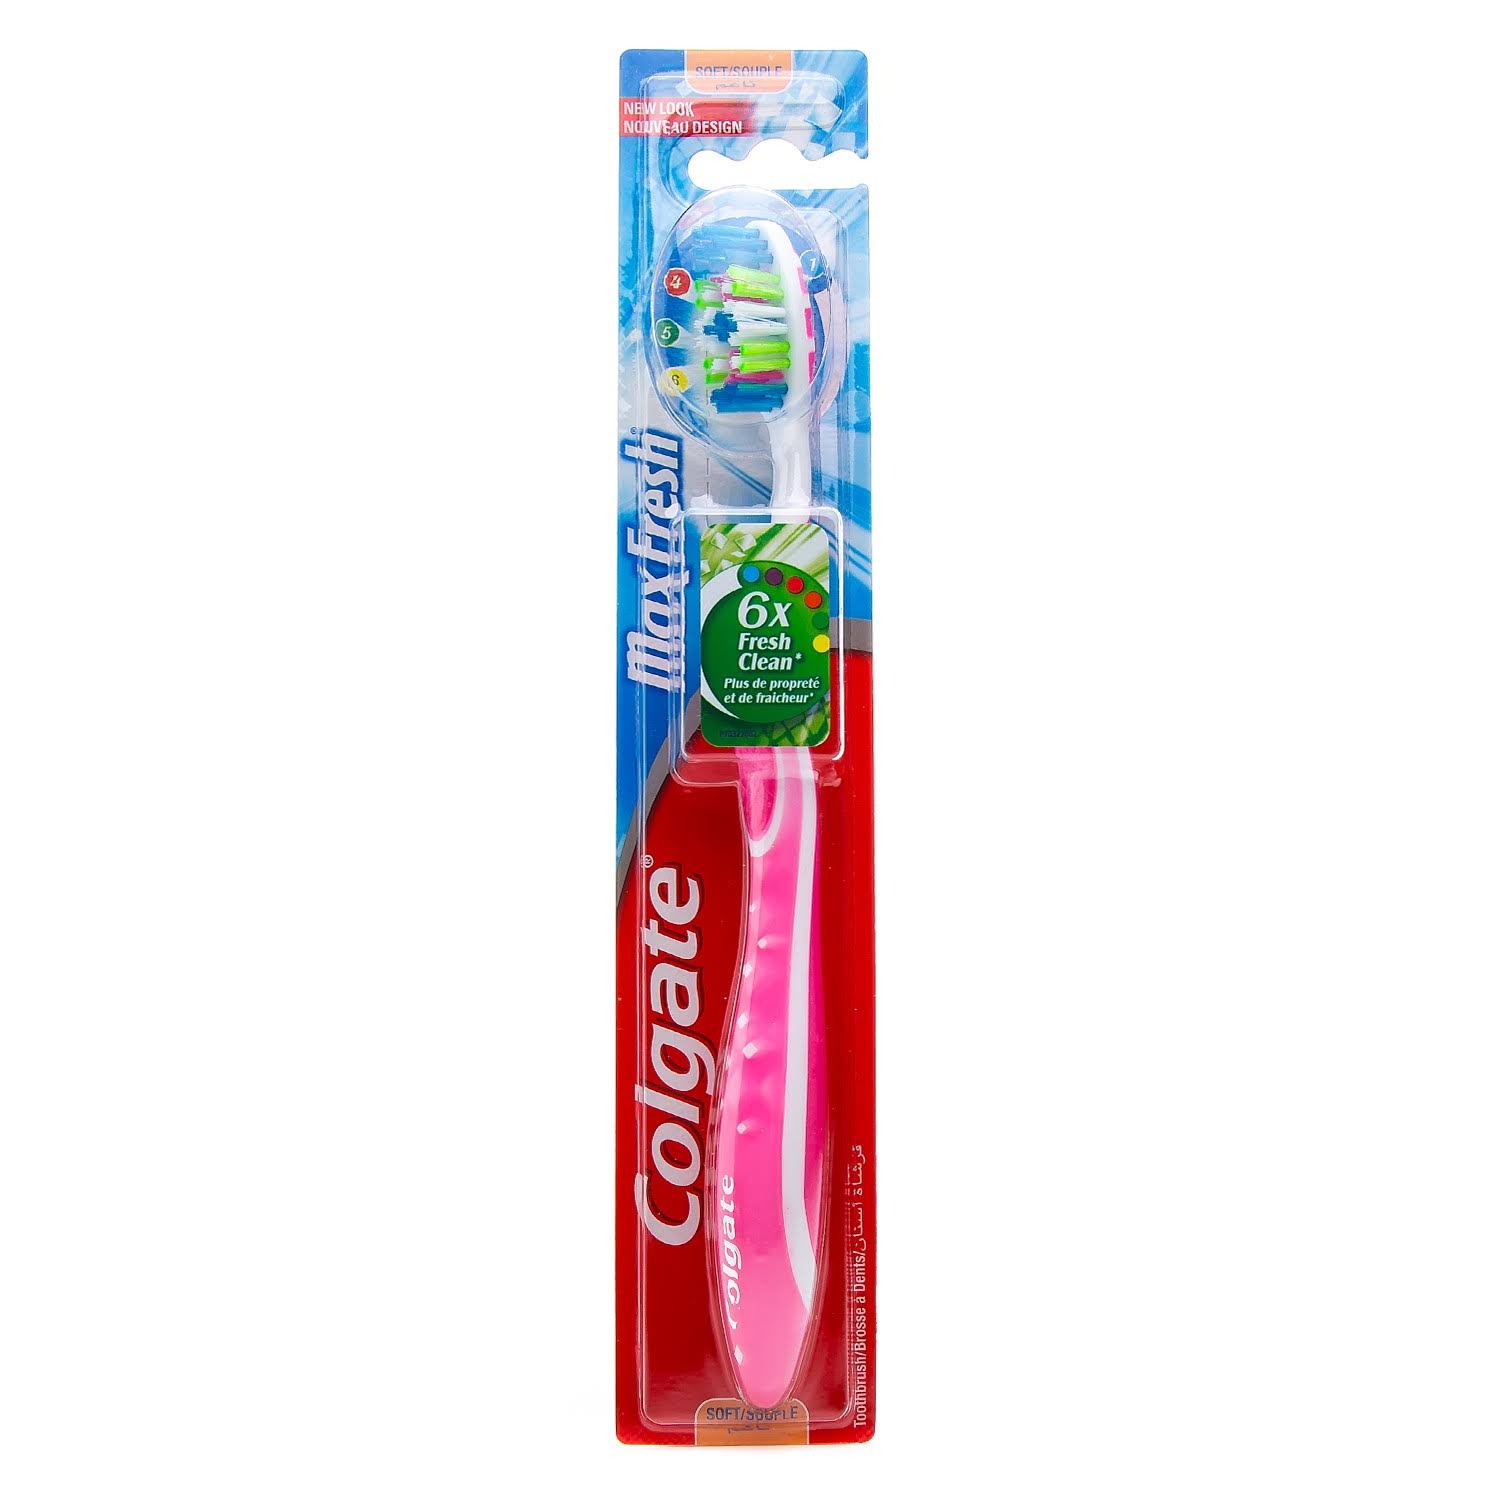 Colgate Maxfresh Toothbrush, Soft